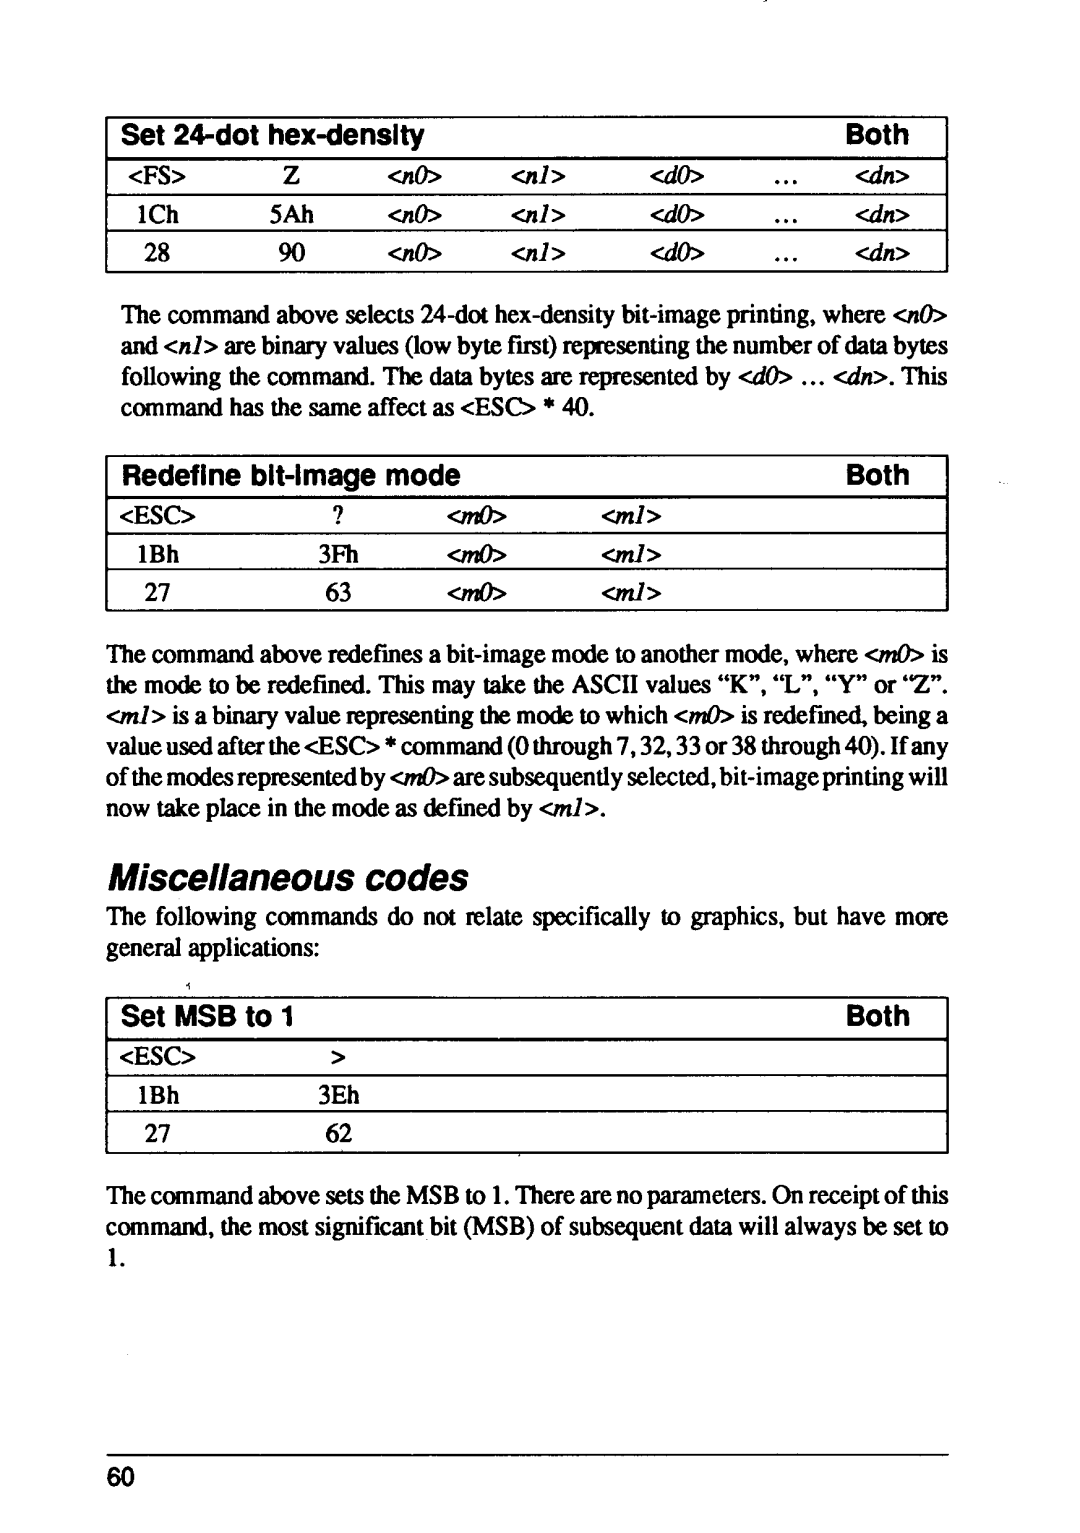 Star Micronics XB24-10 Miscellaneous codes, Set 24-dot hex-density, Both, Redefine bit-image mode, Set MSB to, cESC 